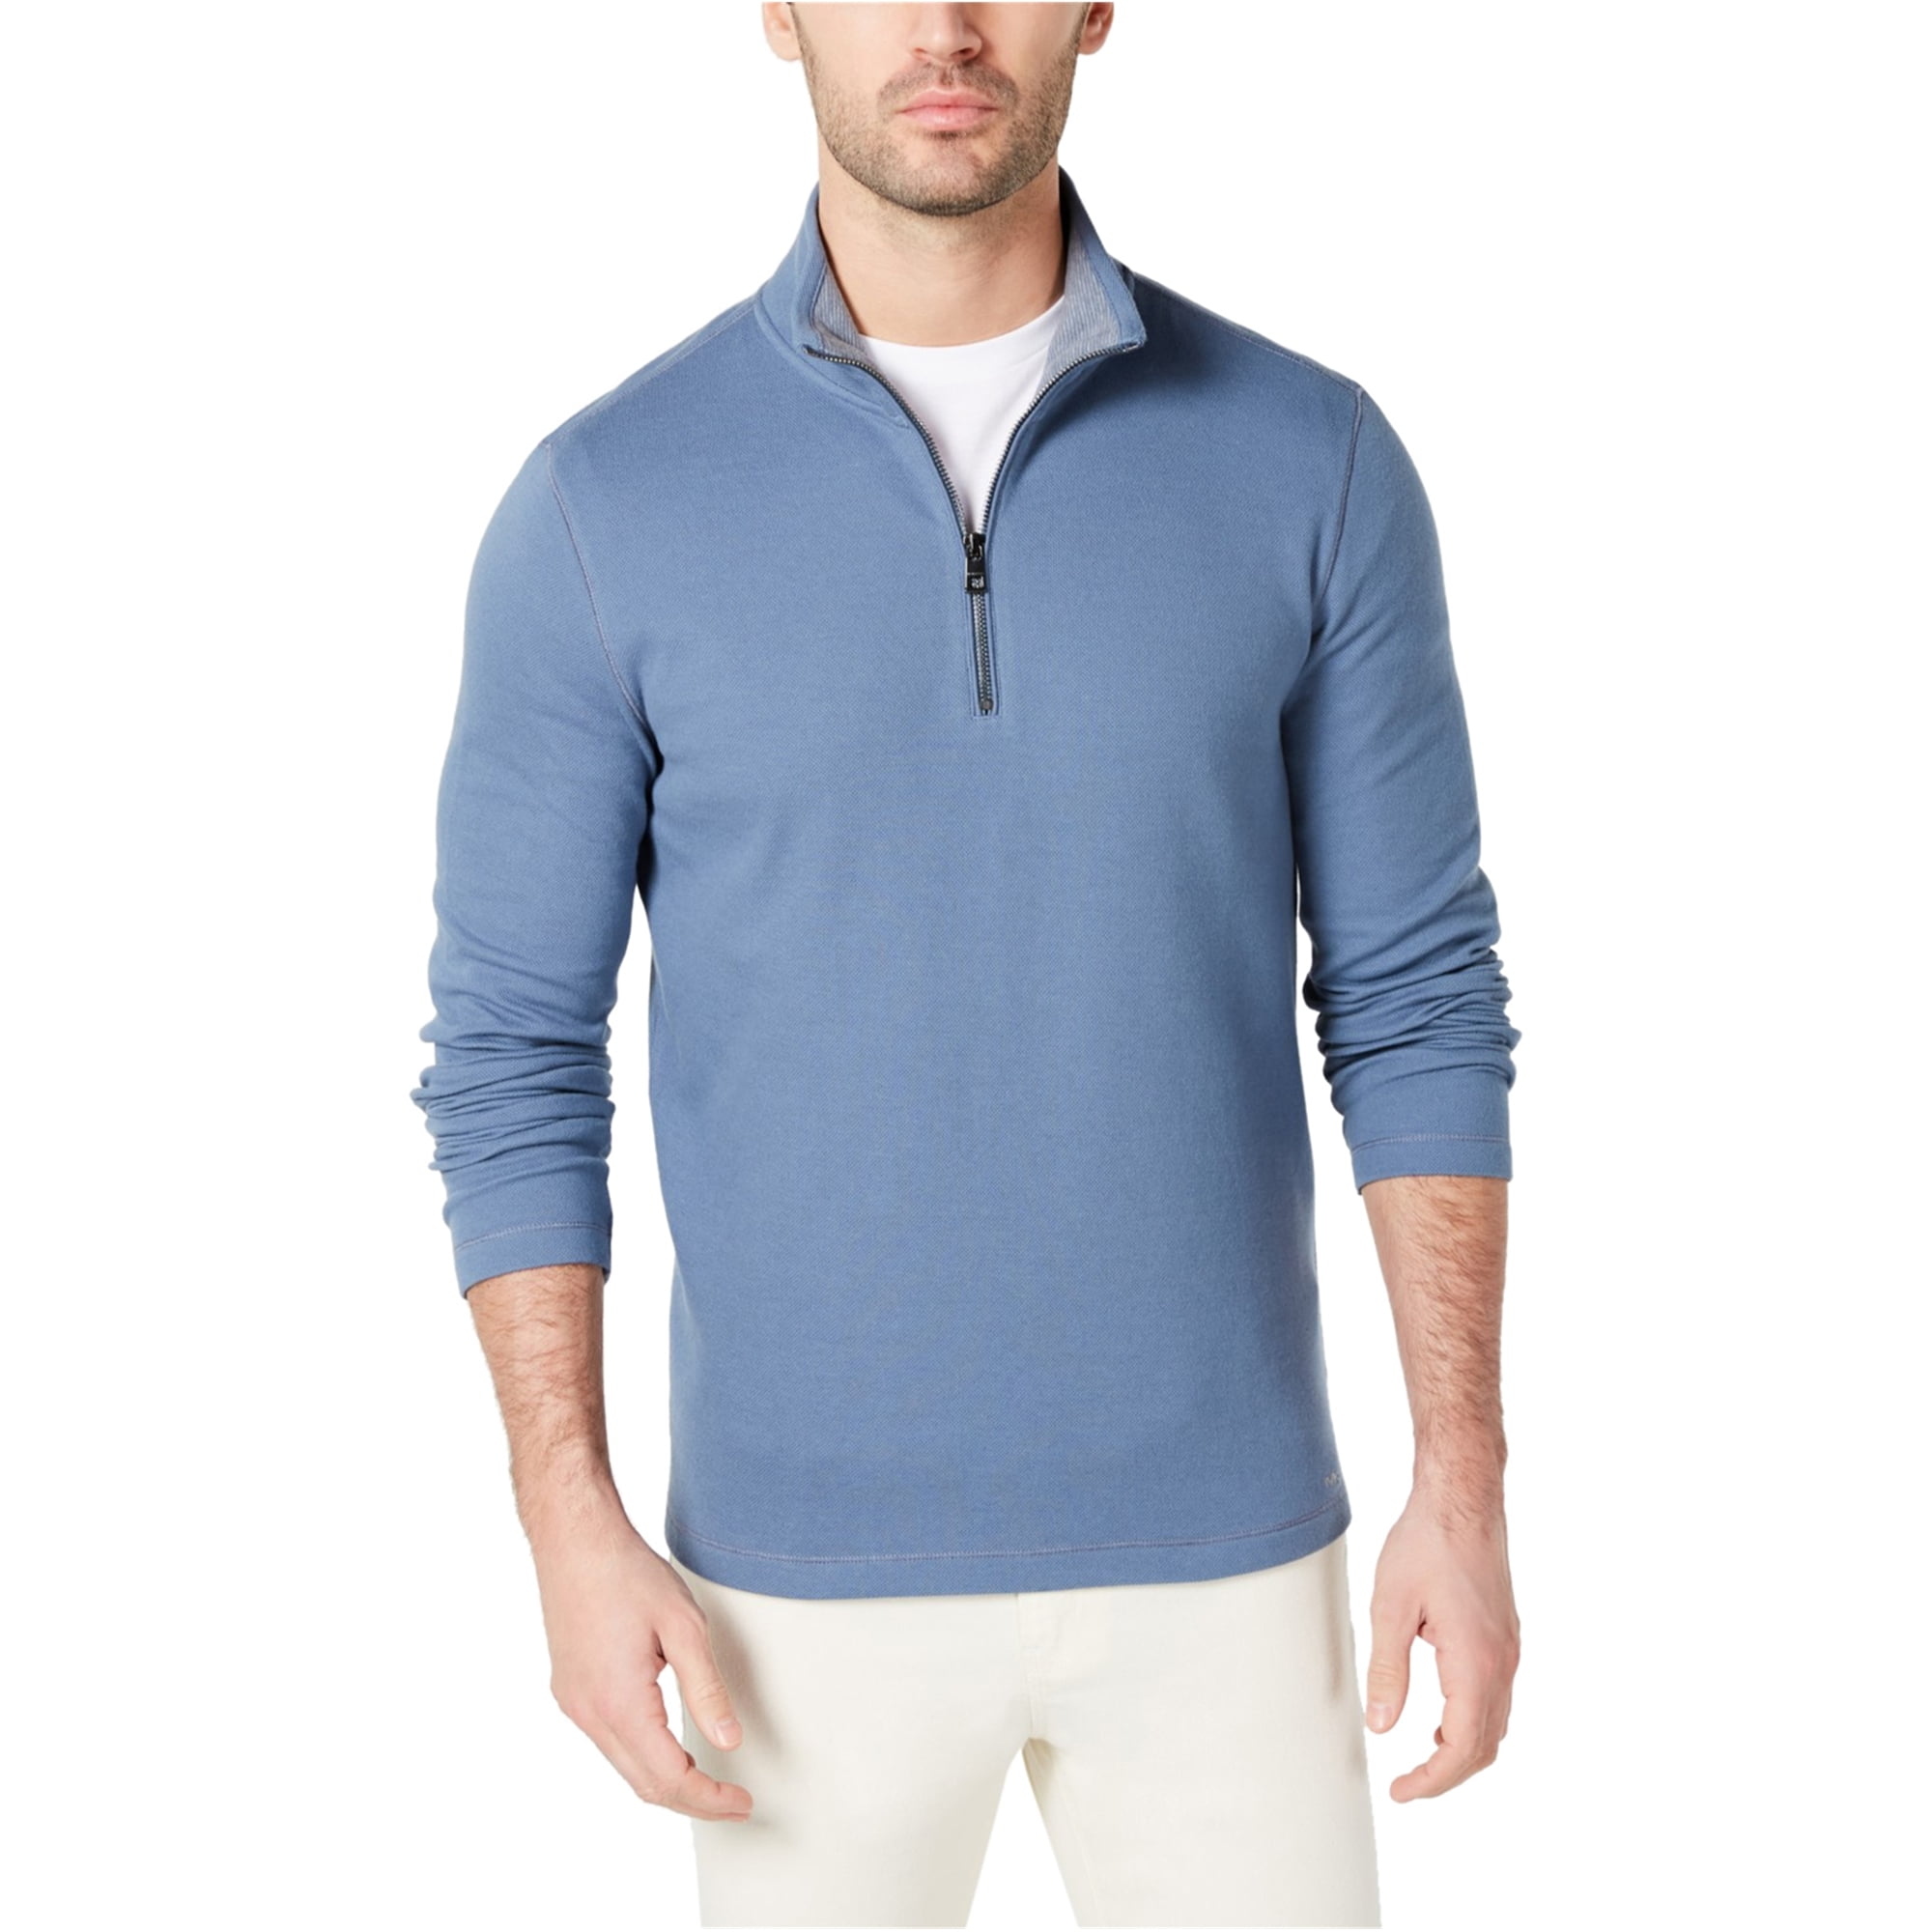 Michael Mens Pique Pullover Sweater, Blue, X-Large Walmart.com